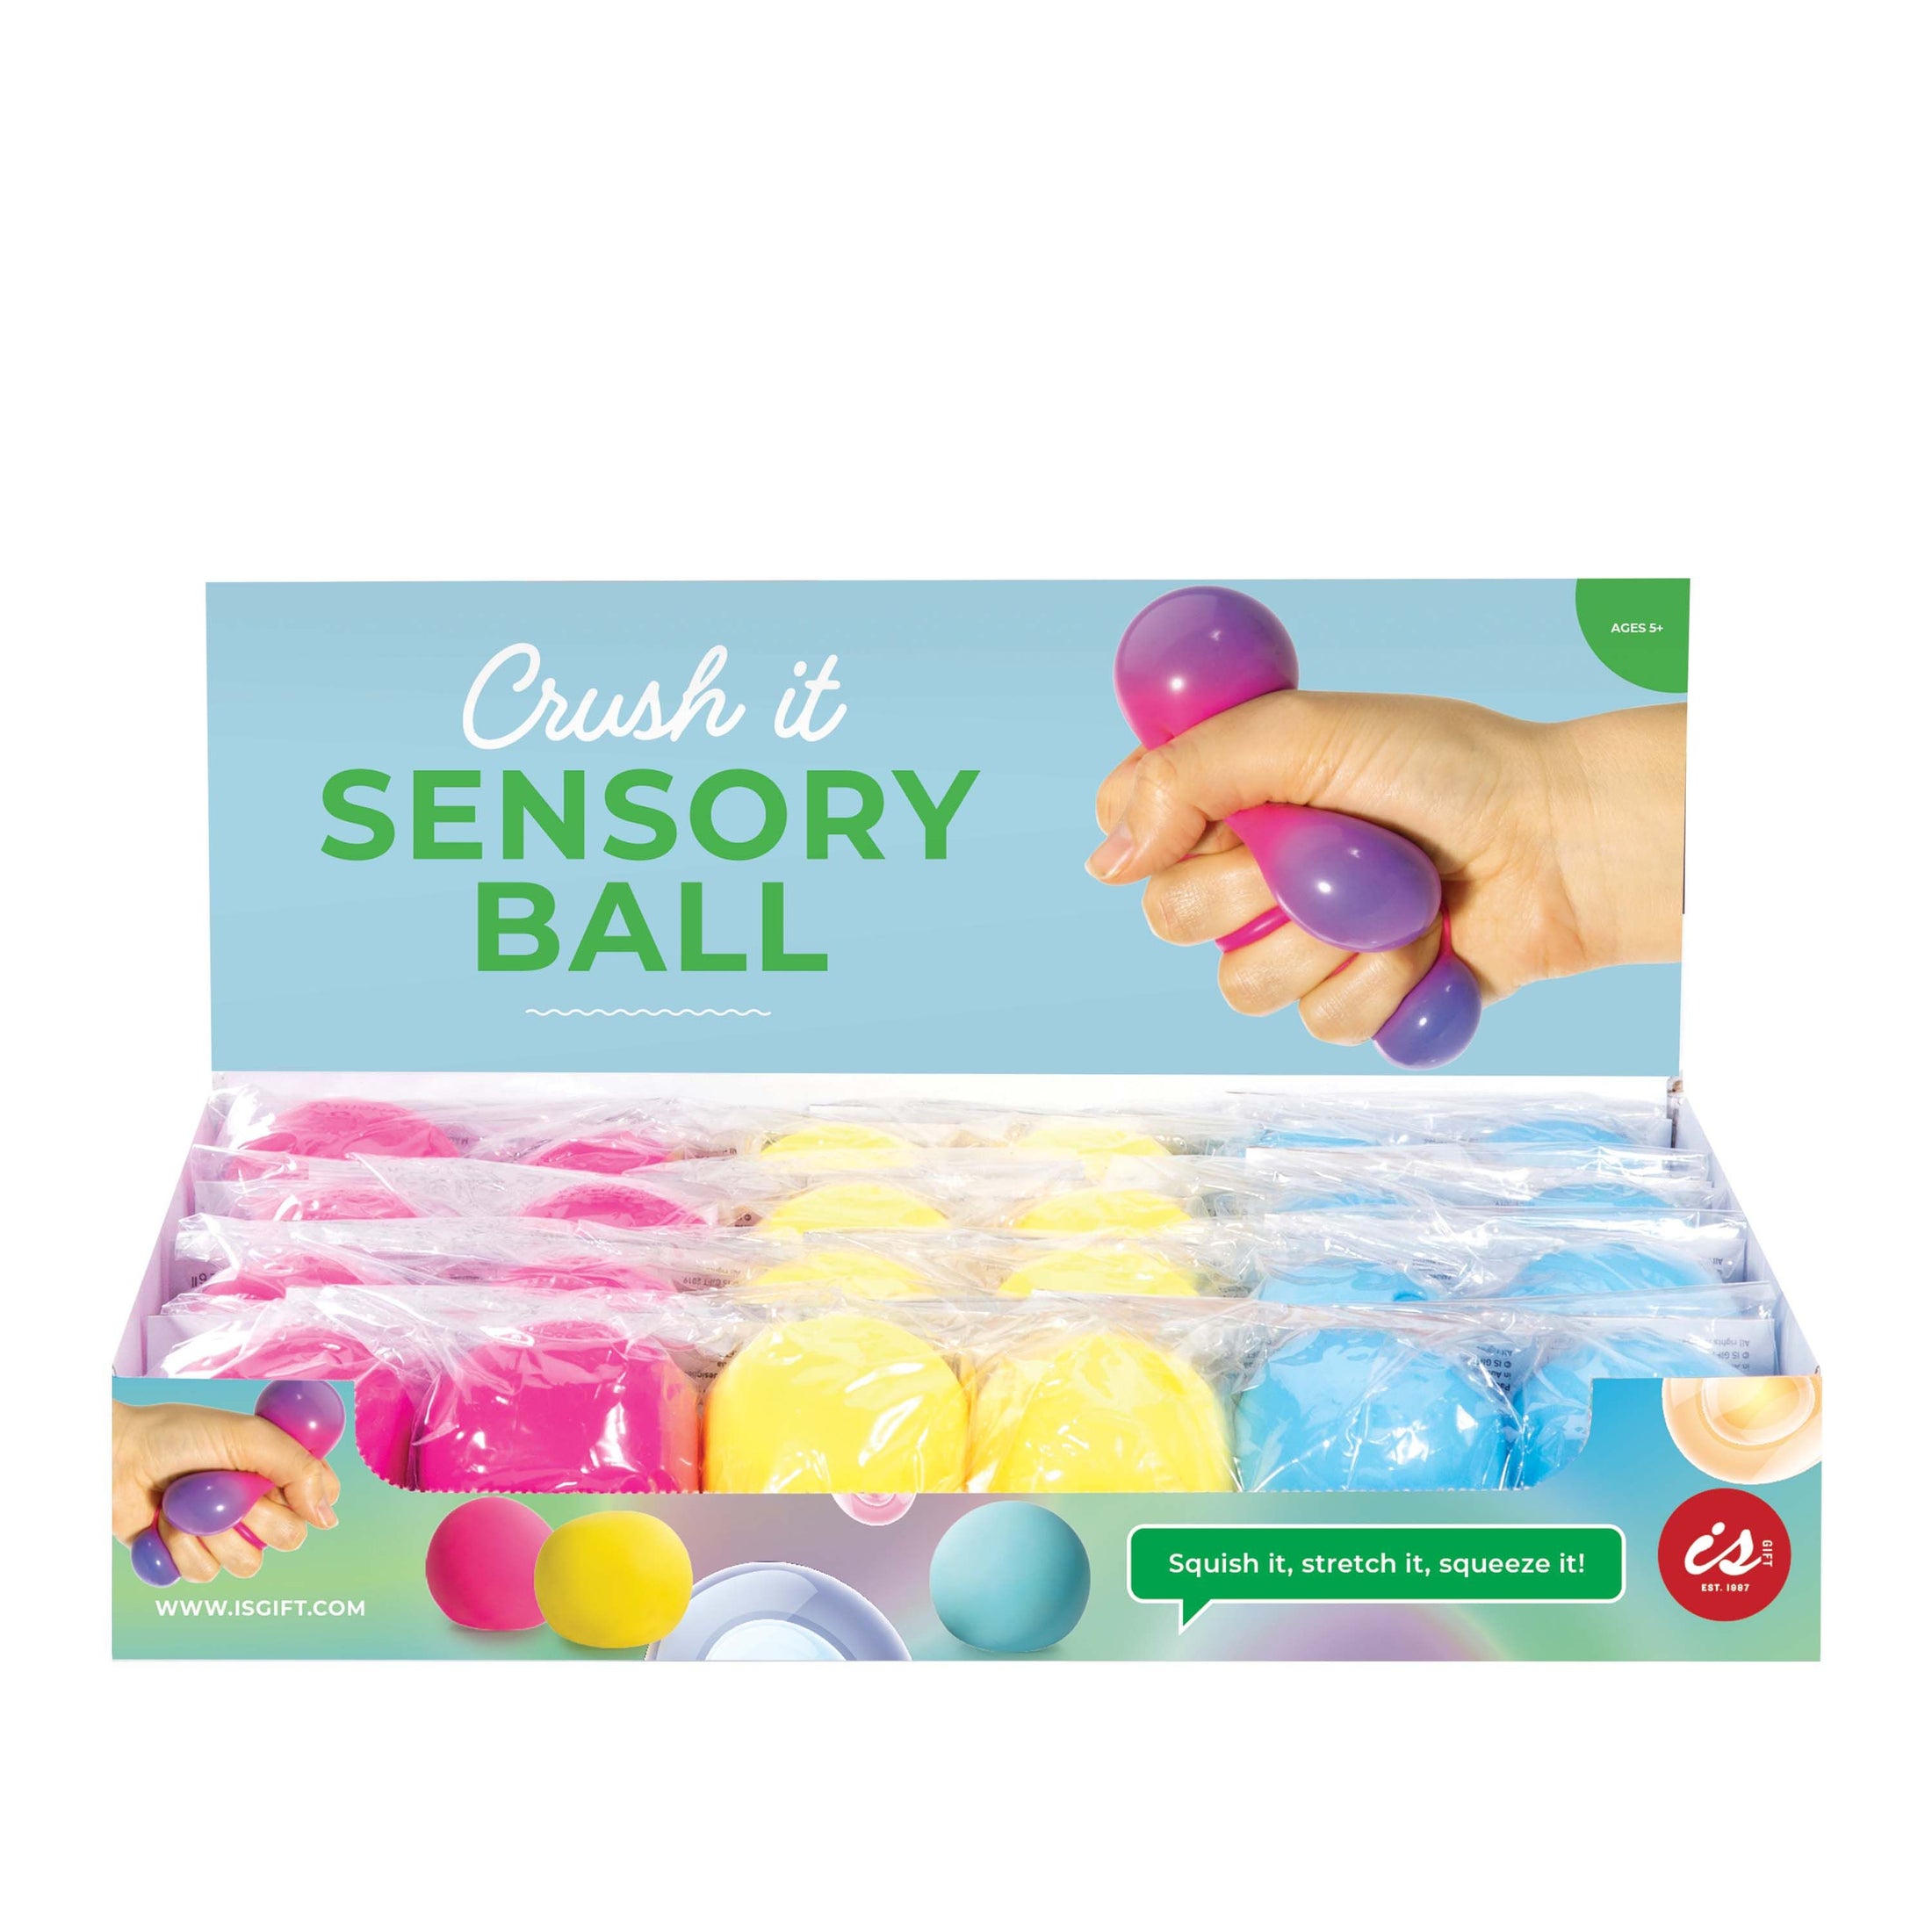 Sensory balls